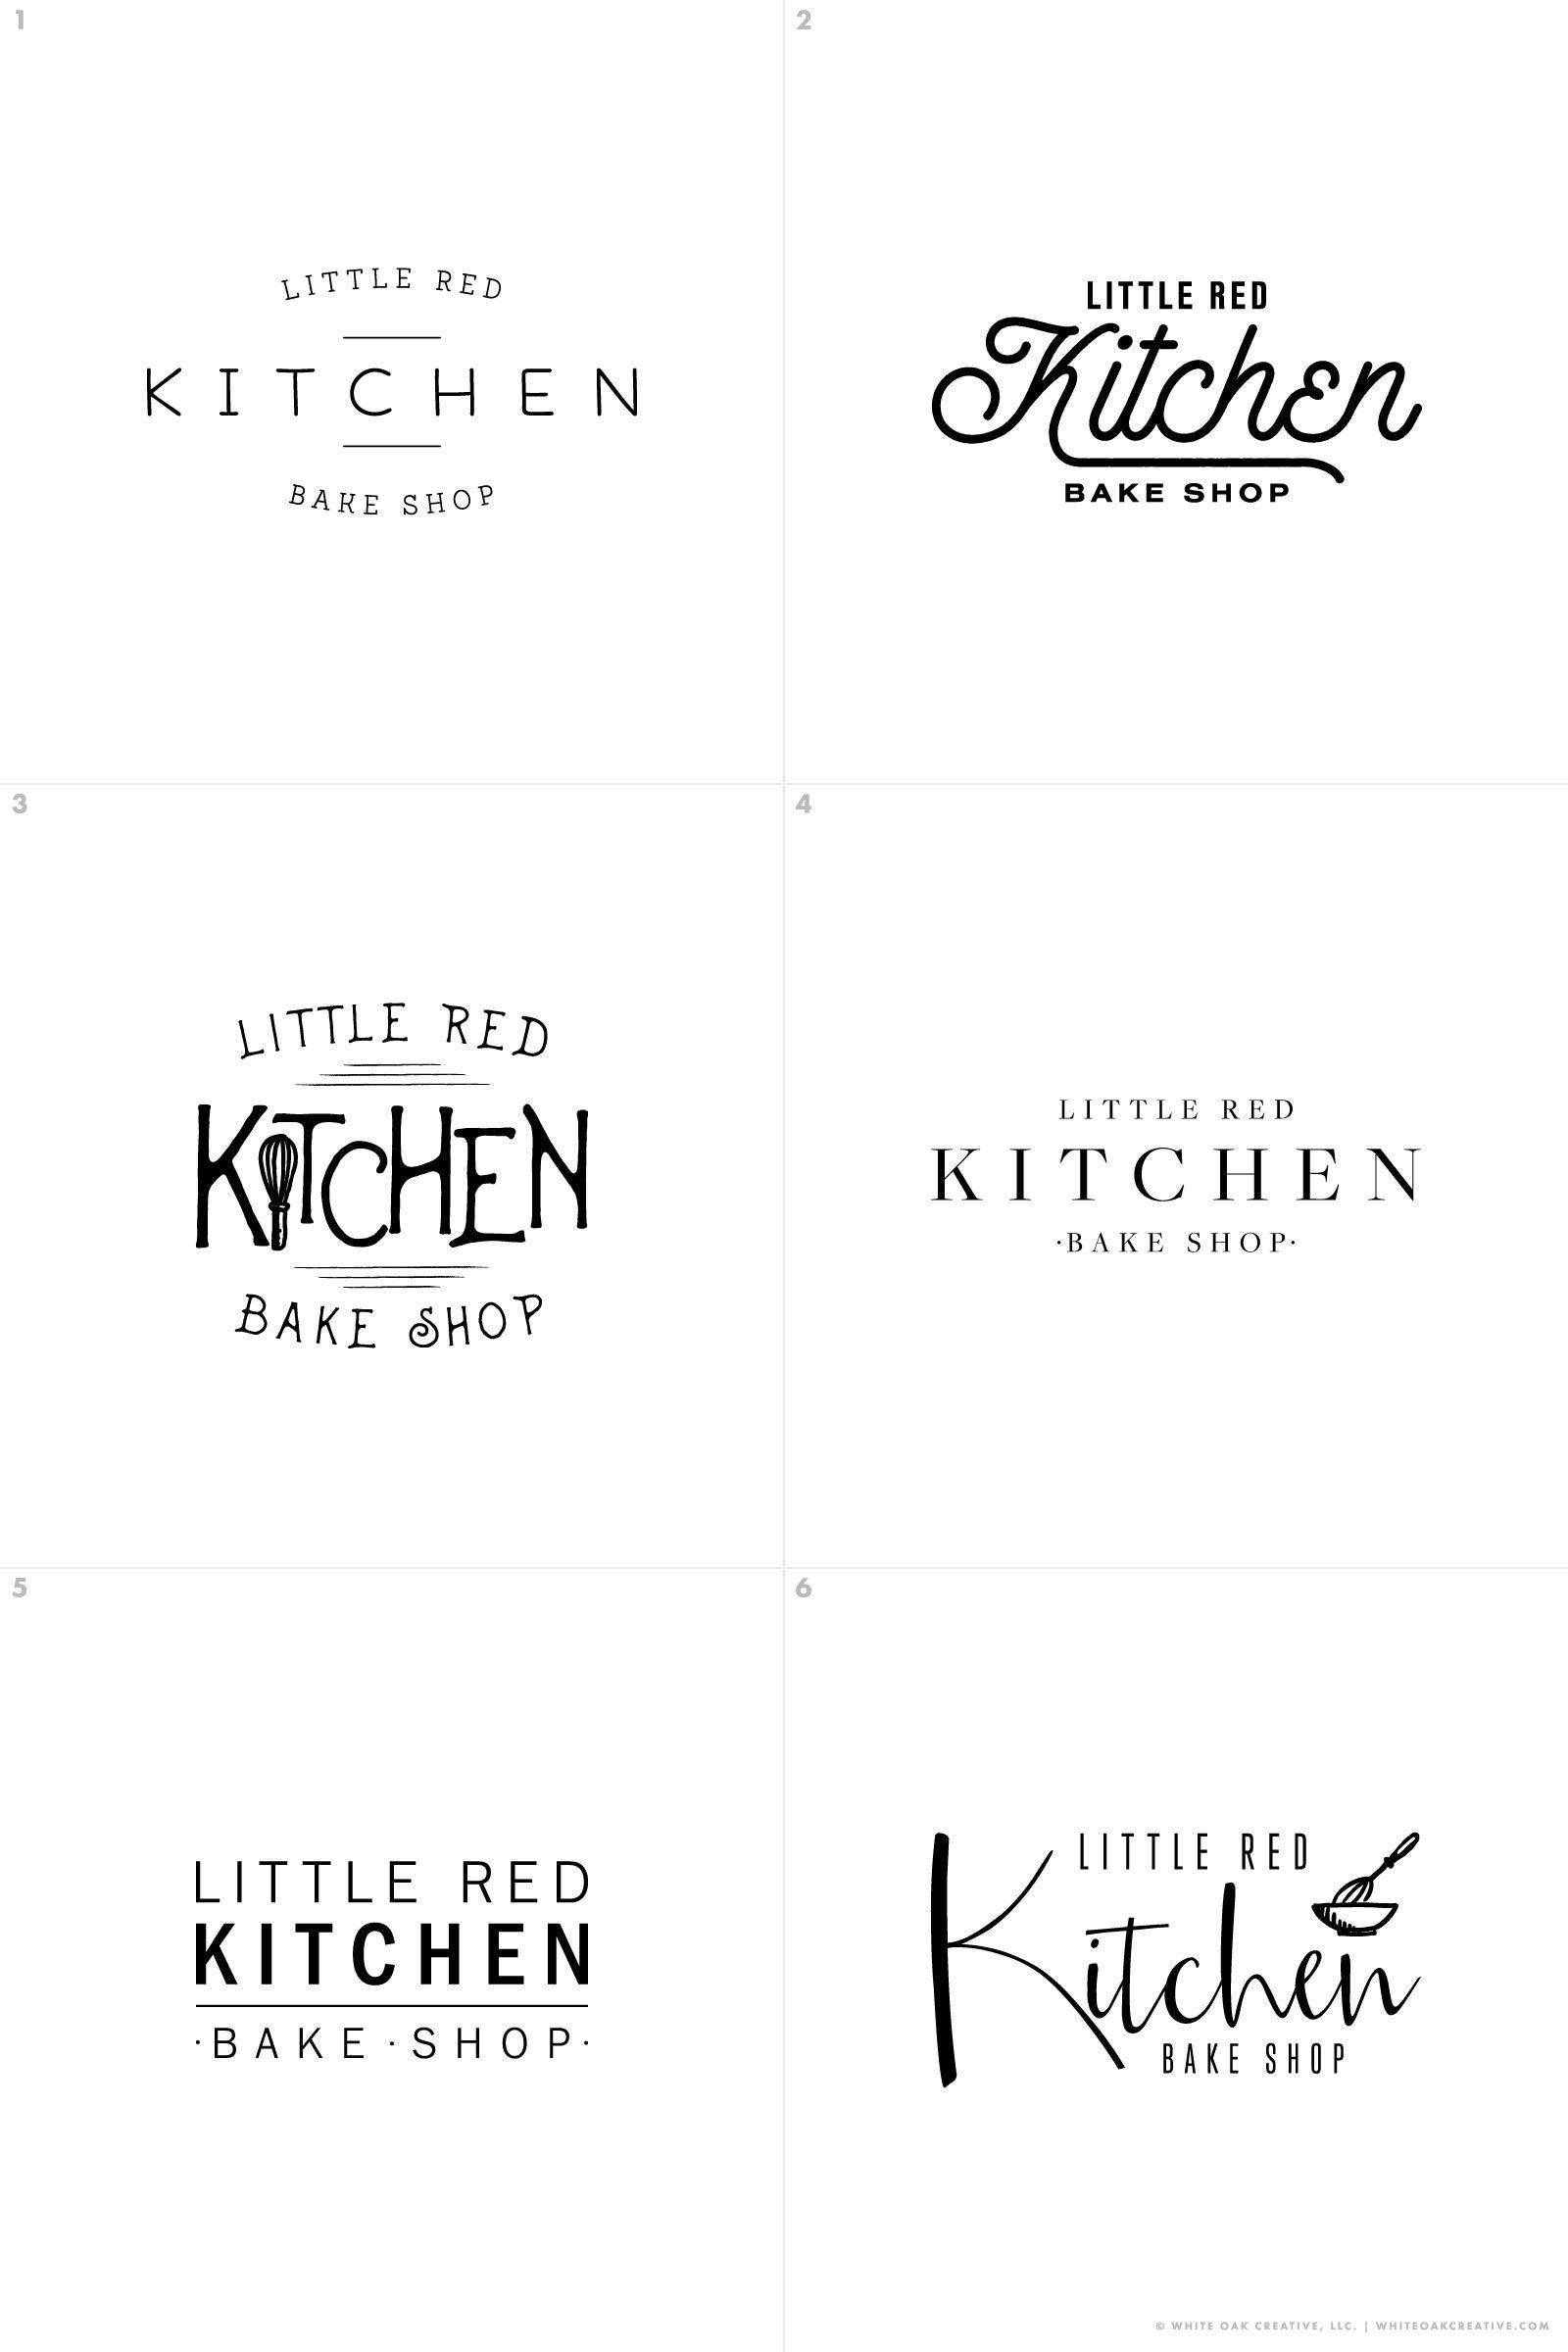 Red White Food Stores Logo - Little Red Kitchen Bake Shop | Typography | Pinterest | Logo design ...